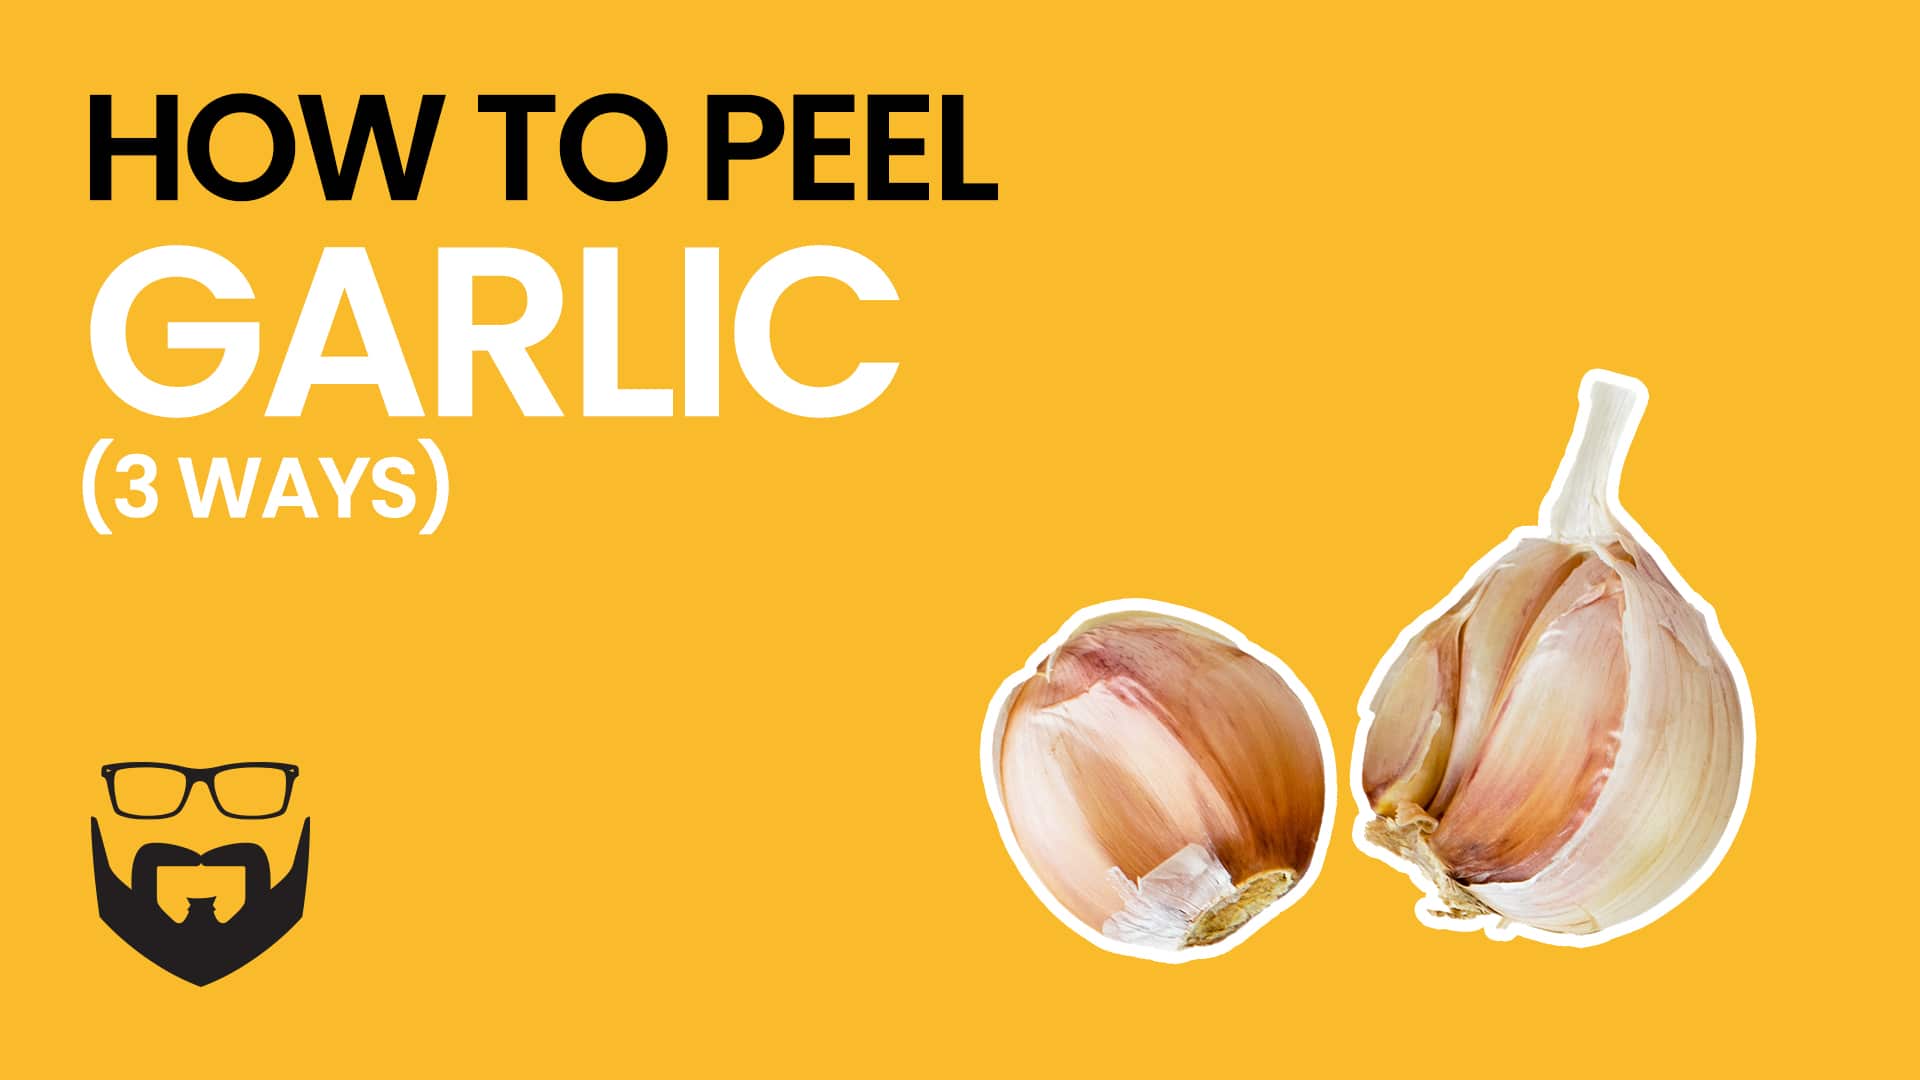 How to Peel Garlic 3 Ways Video - Yellow